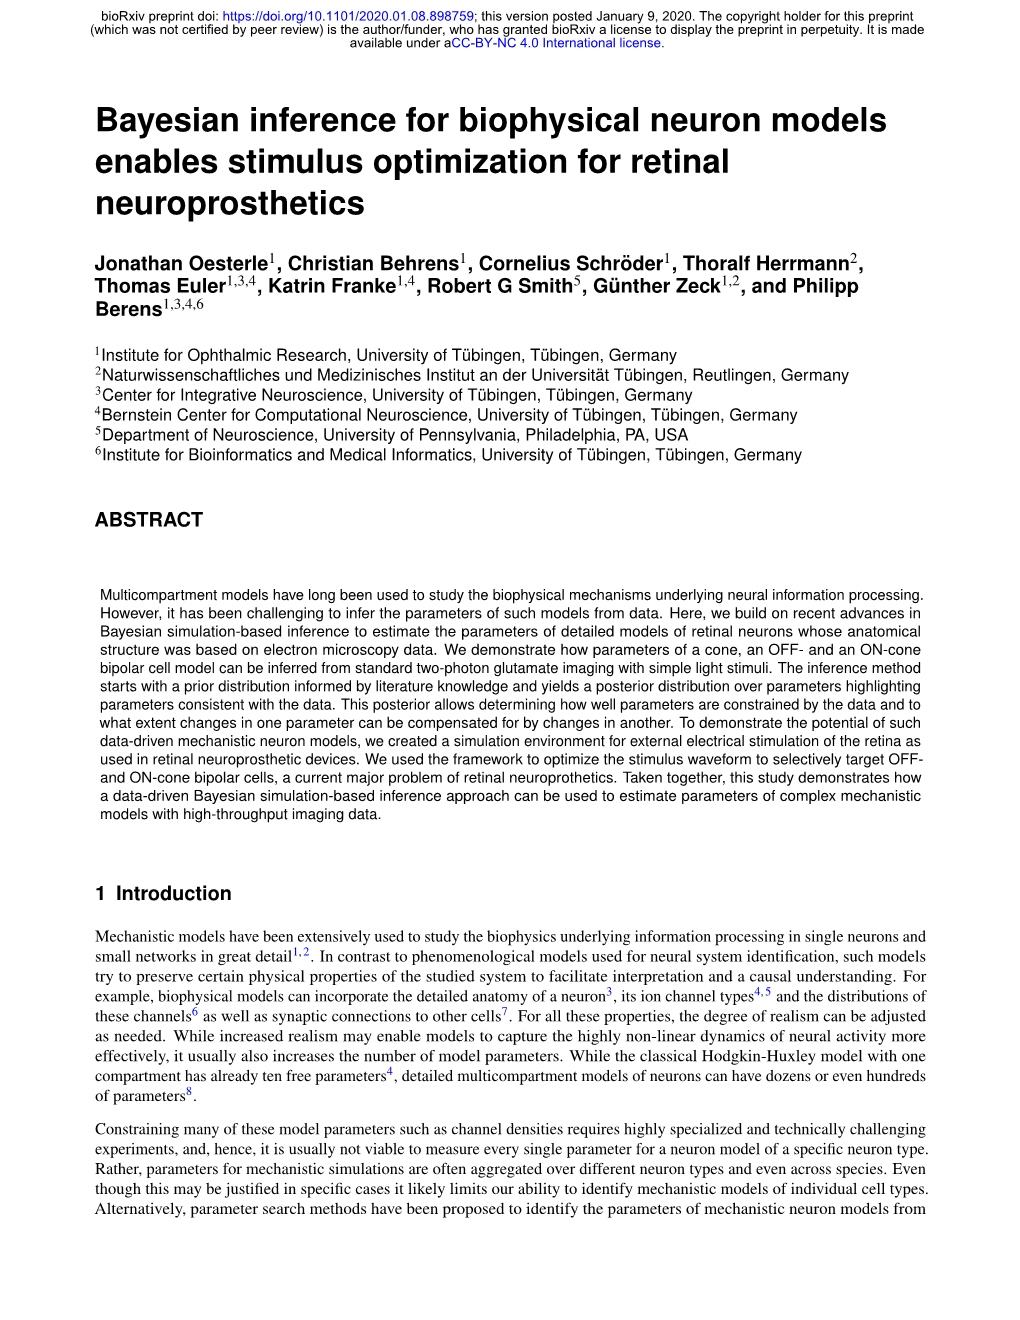 Bayesian Inference for Biophysical Neuron Models Enables Stimulus Optimization for Retinal Neuroprosthetics